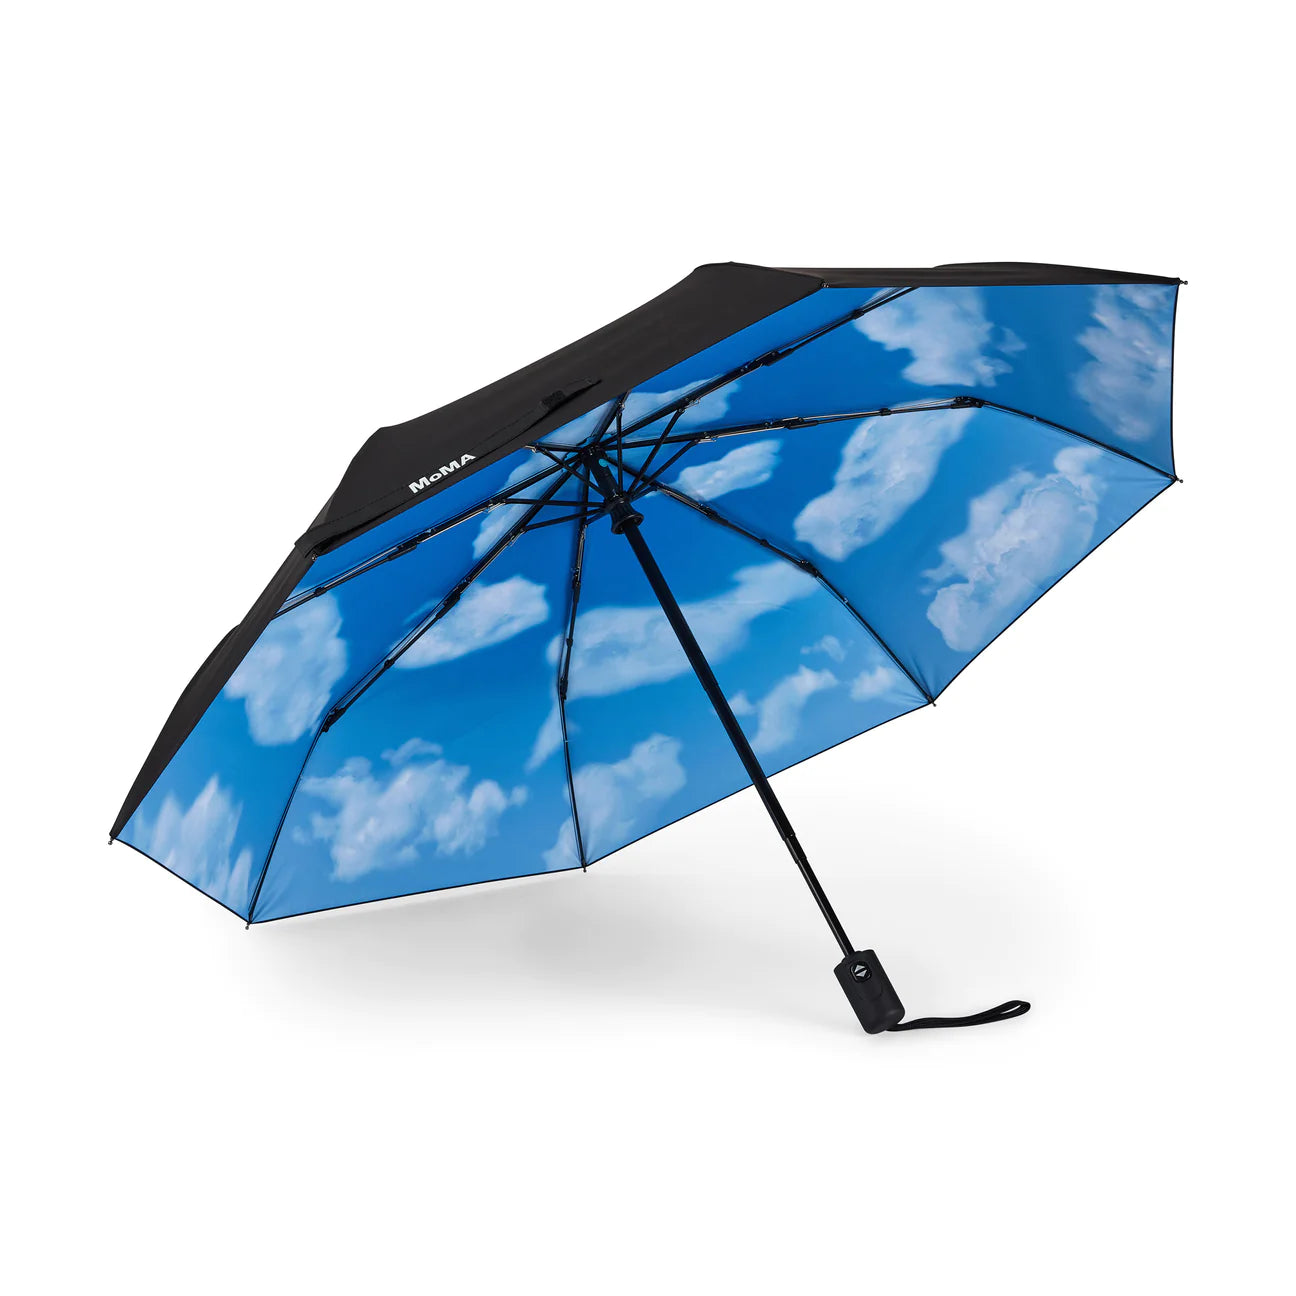 Umbrella Mini Sky Recycled